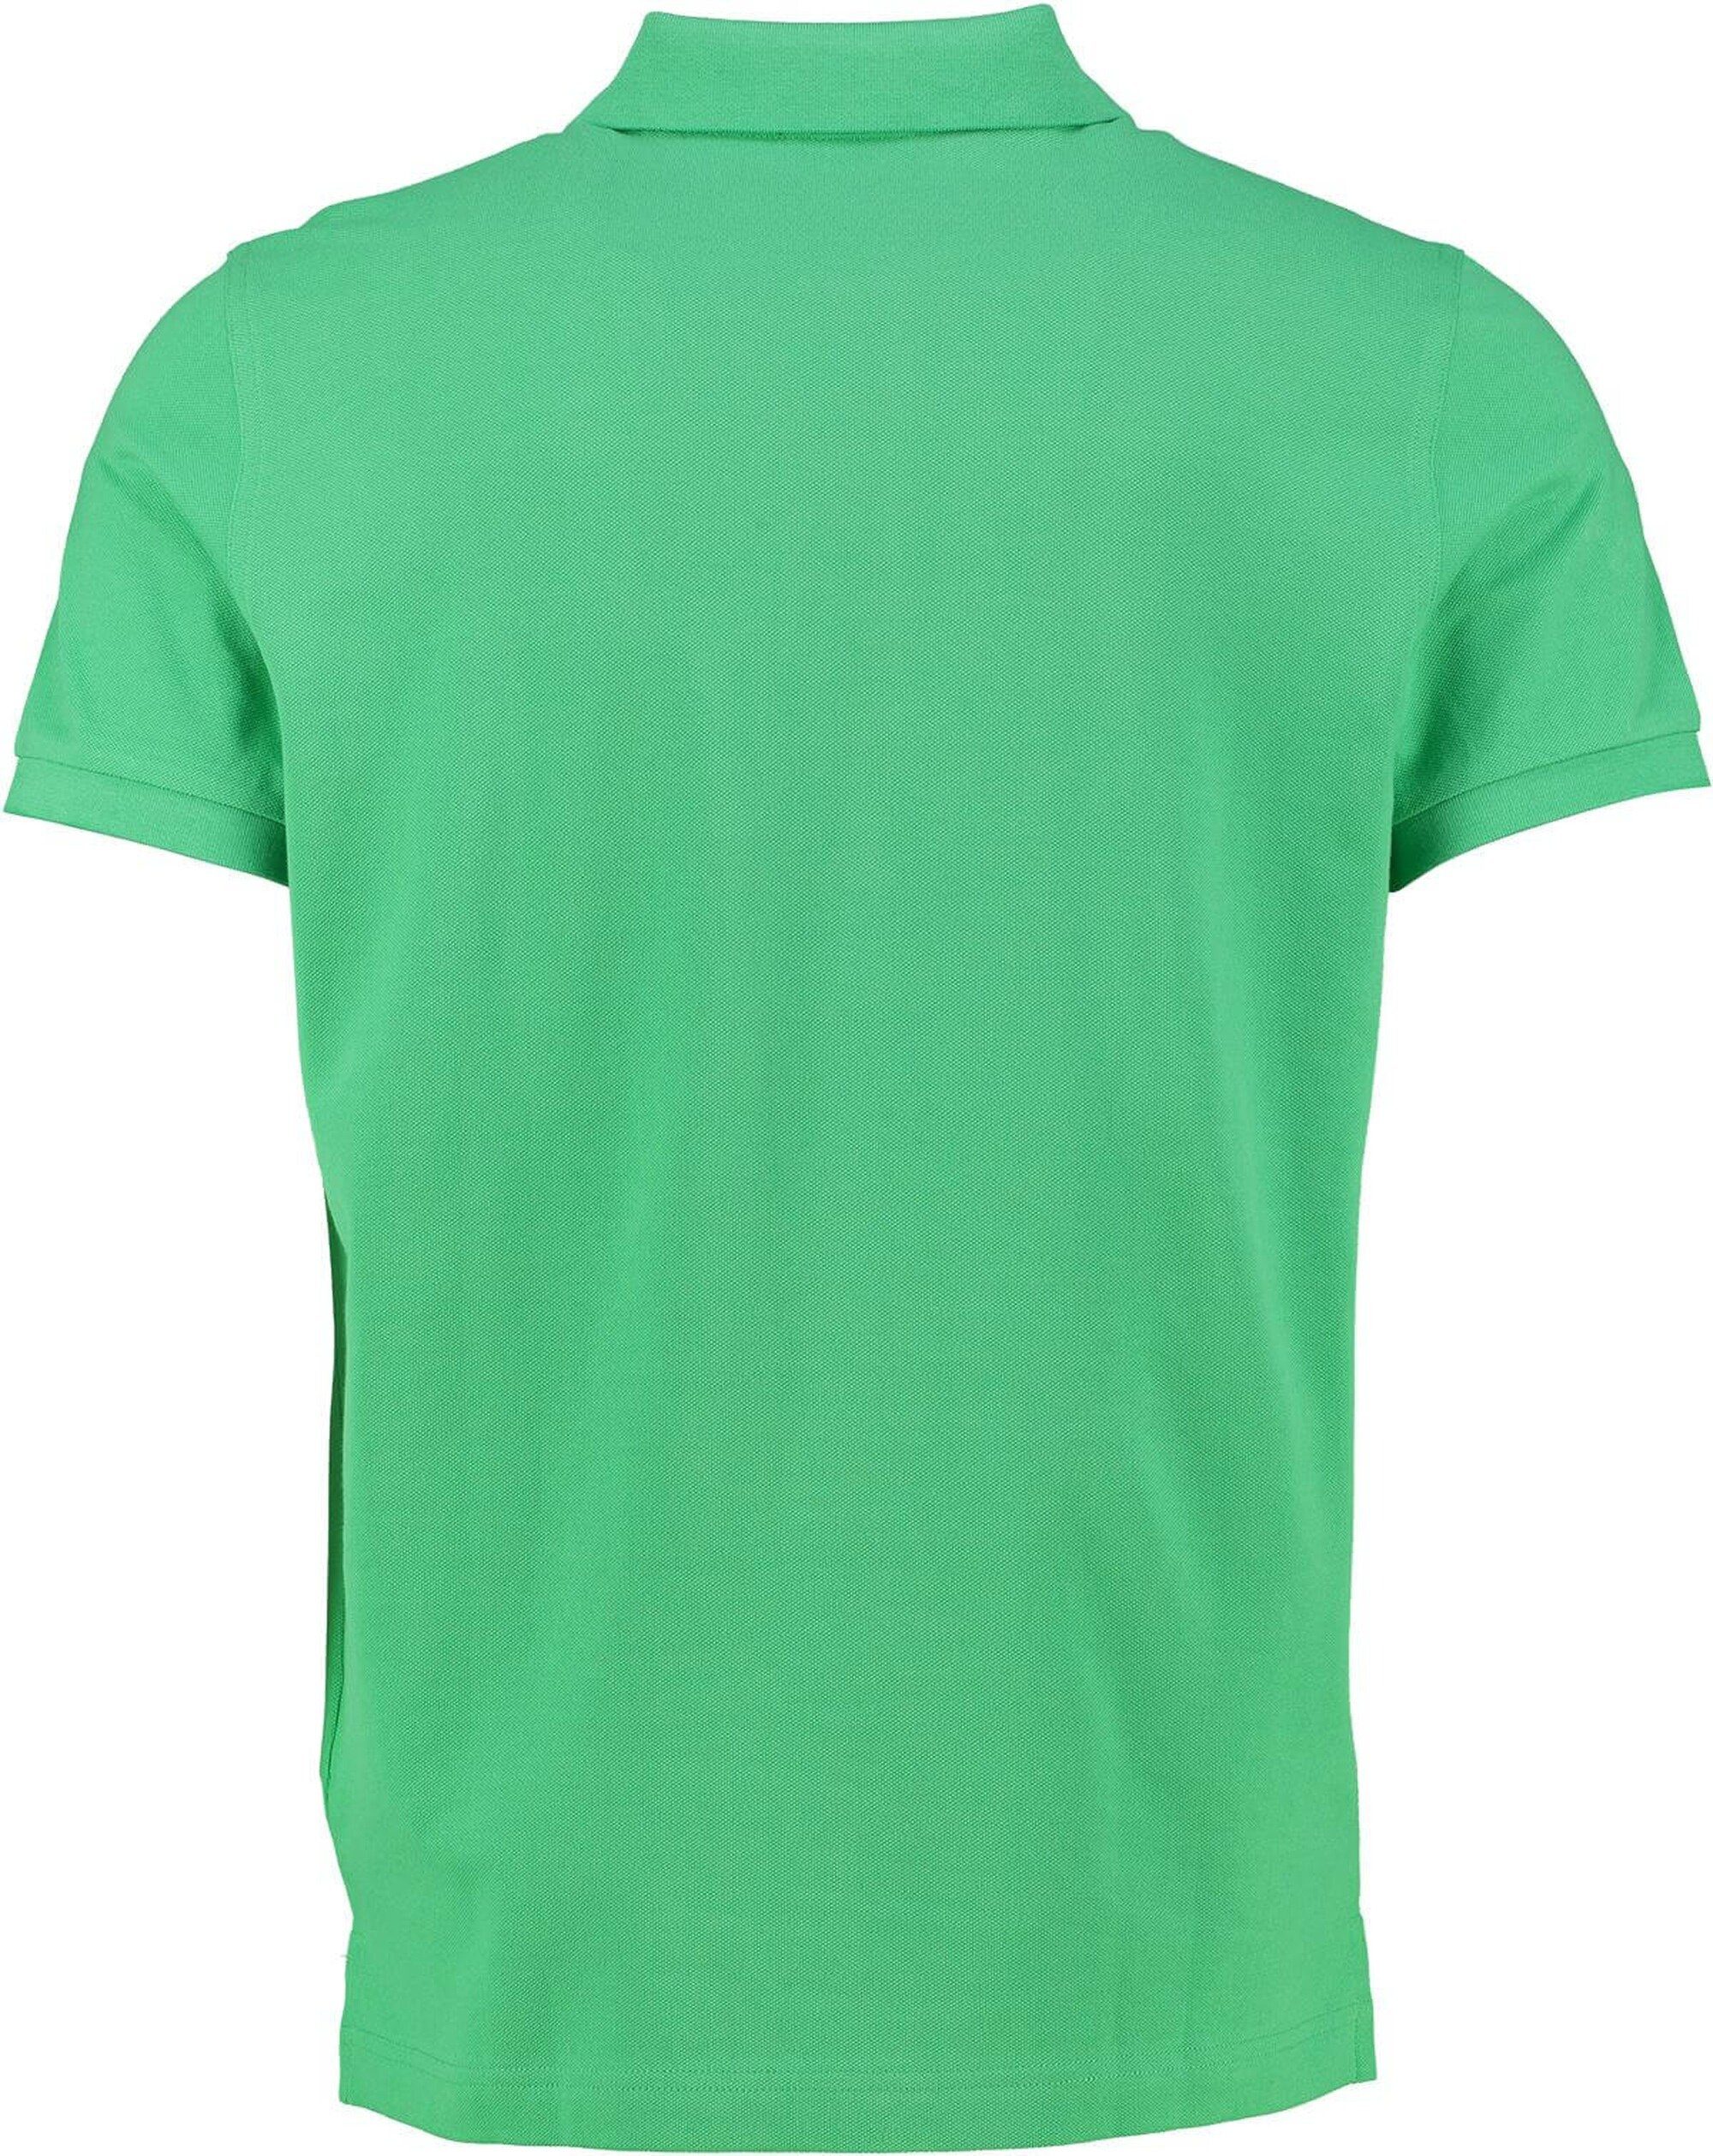 Rugger Polo-Shirt GANT Gant green Original grün mid Poloshirt